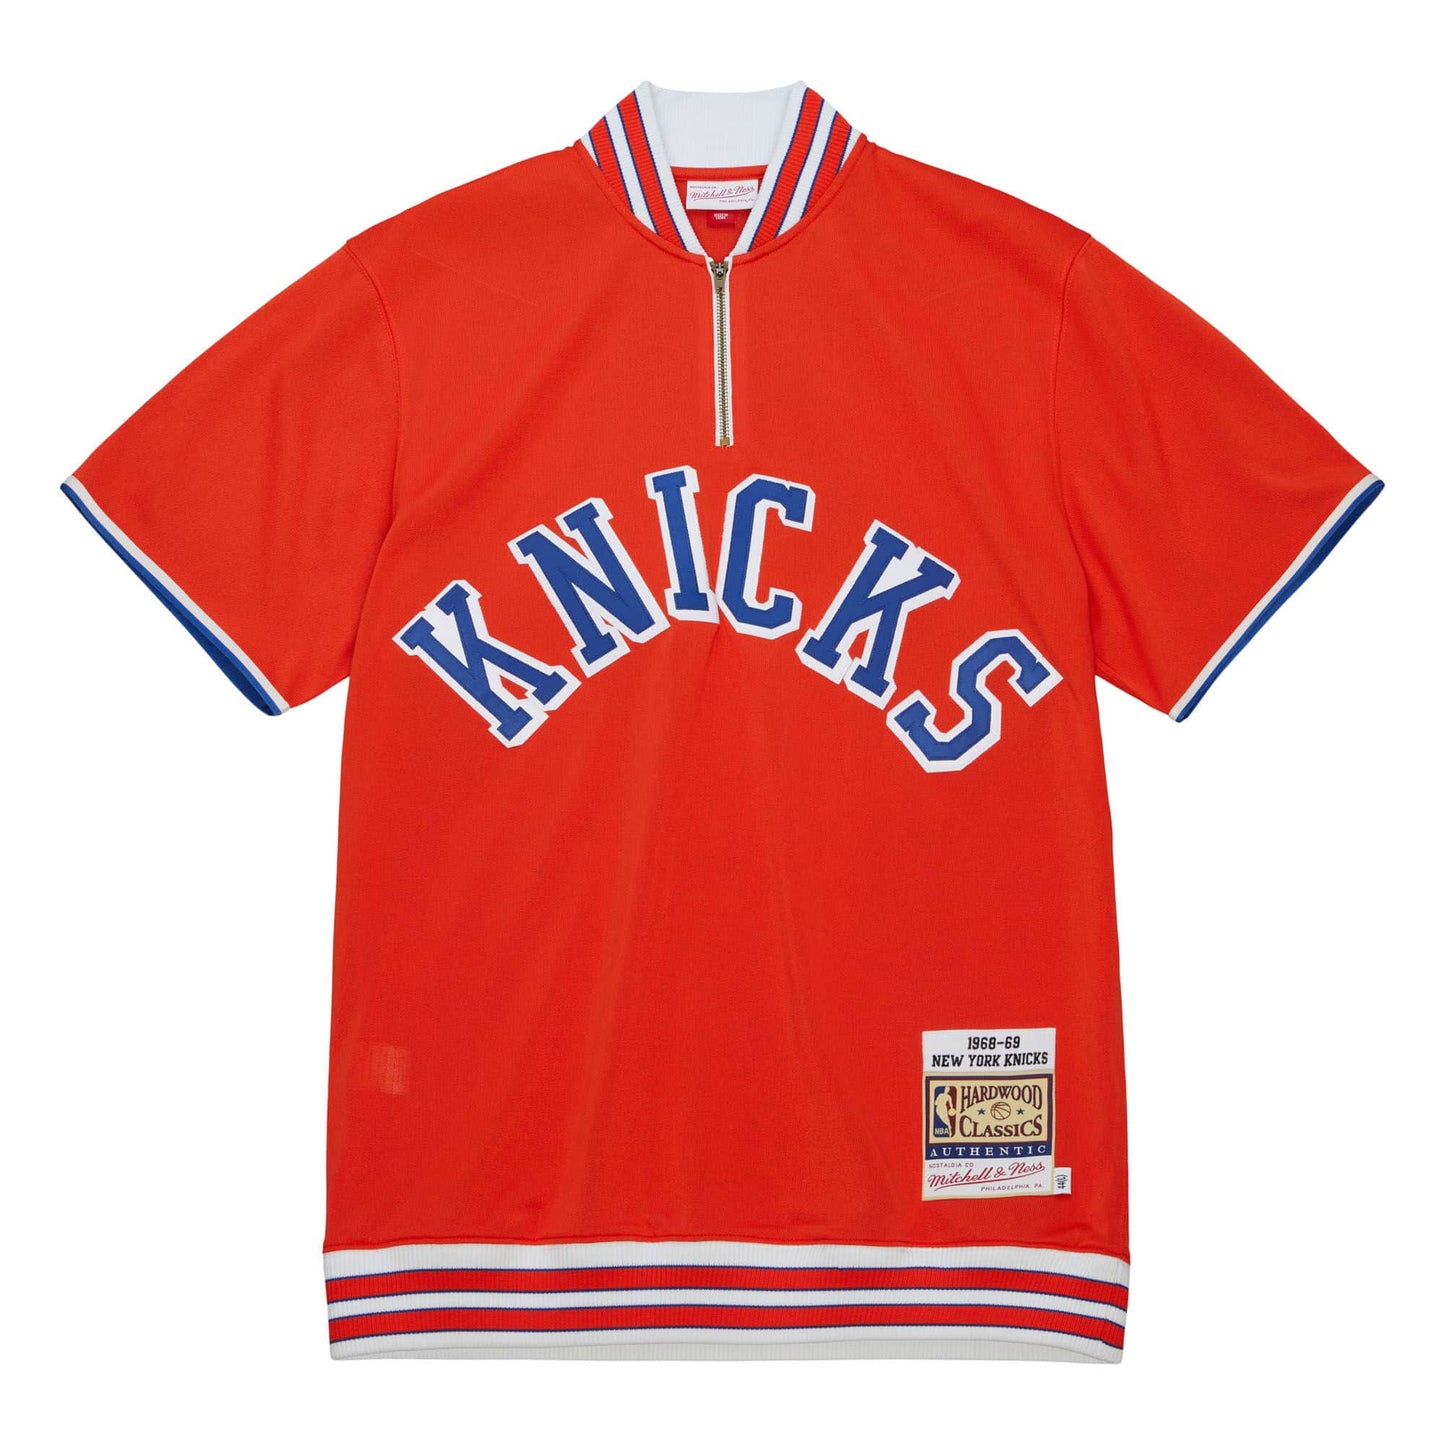 Authentic New York Knicks 1968-69 Shooting Shirt